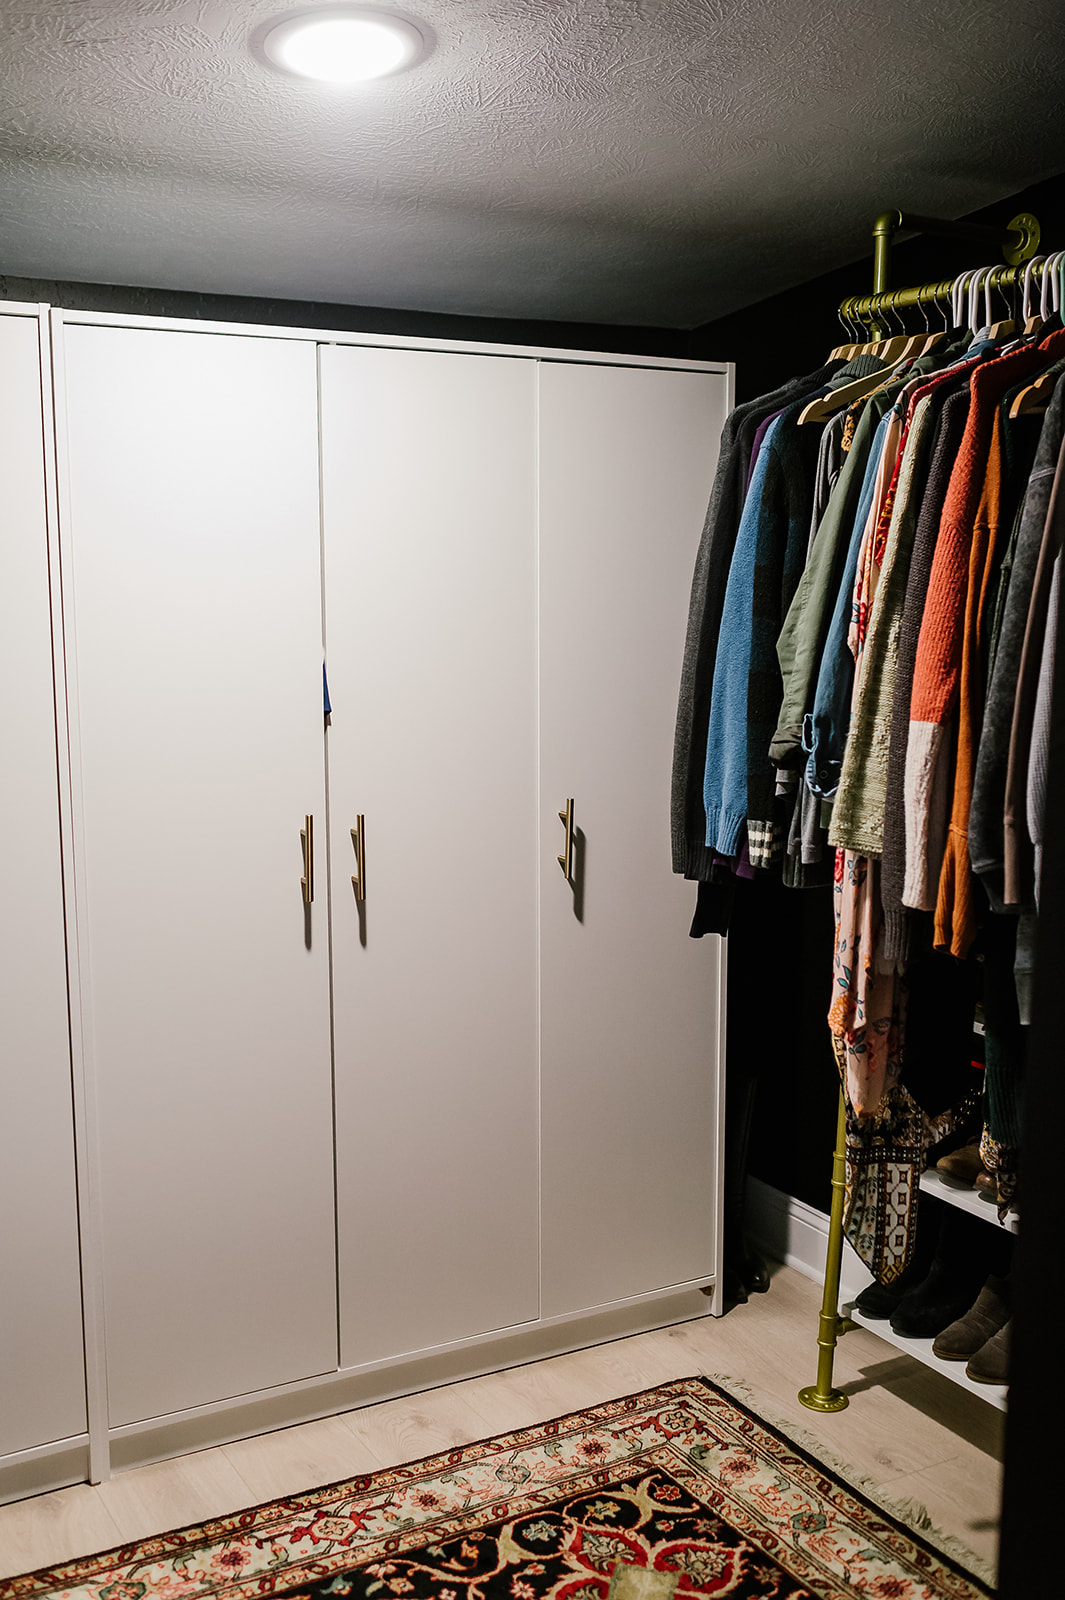 An Affordable and Functional Master Closet Design | Miranda Schroeder Blog

www.mirandaschroeder.com